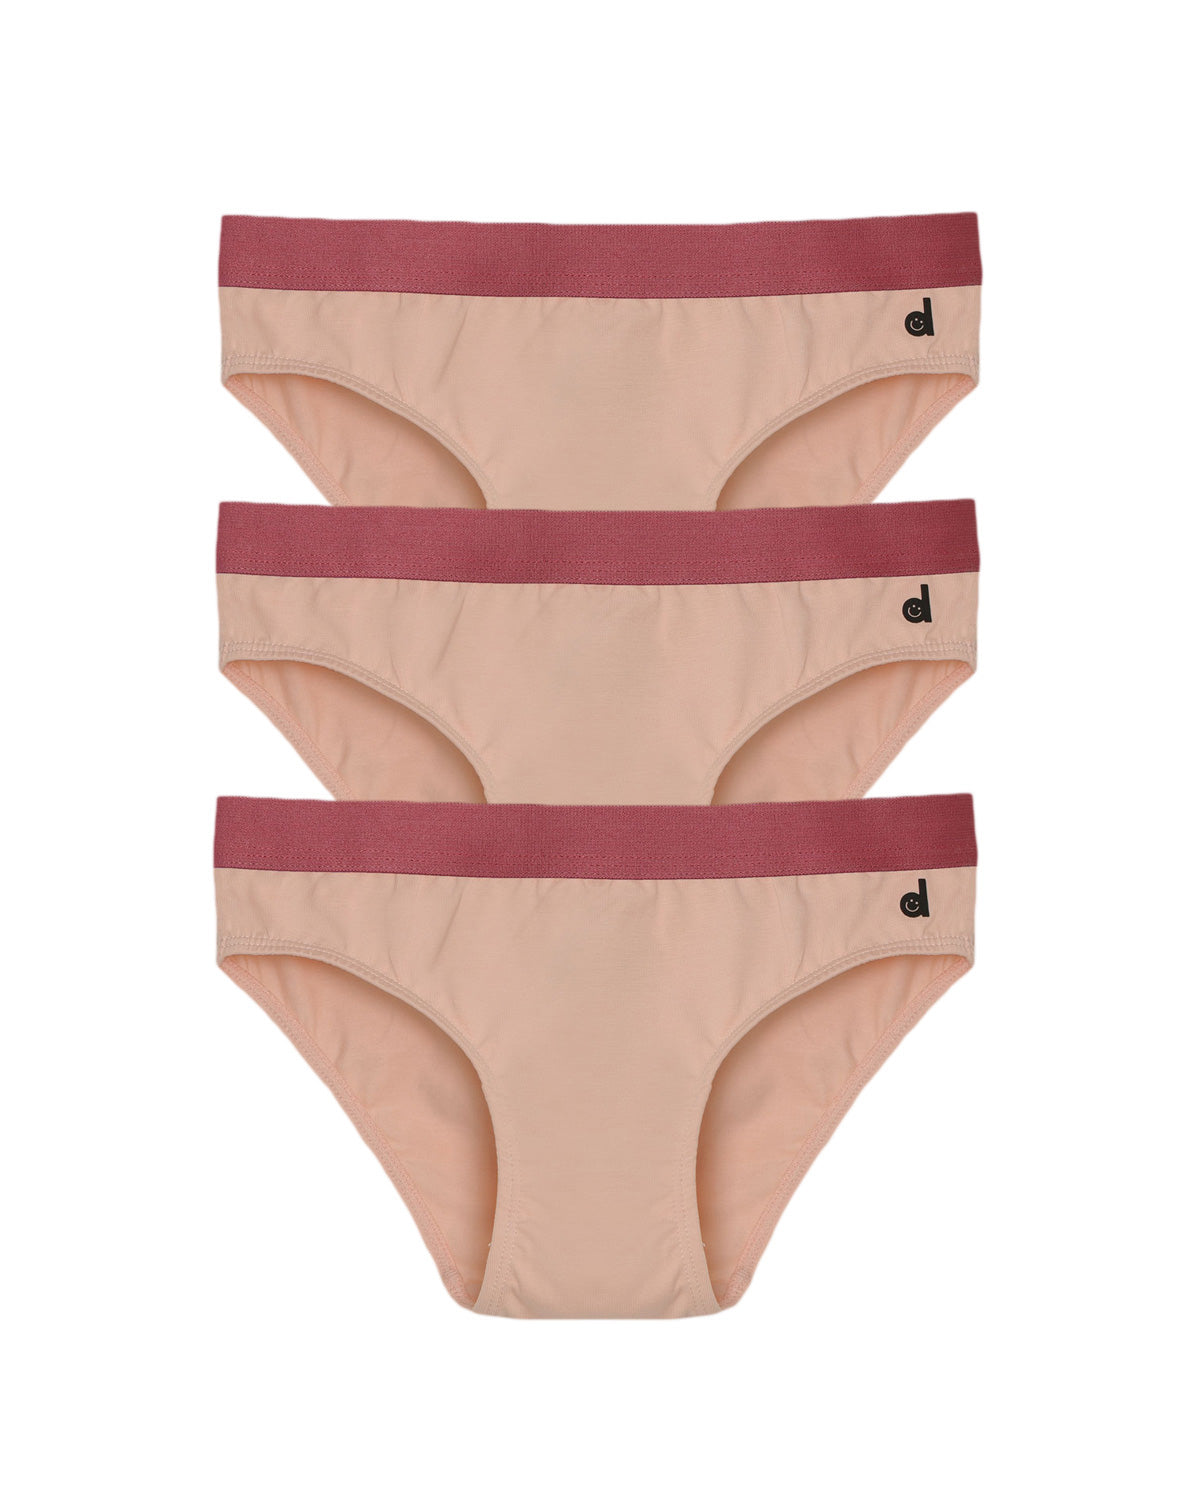 Girls Underwear Single Pair – Drawers Clothing